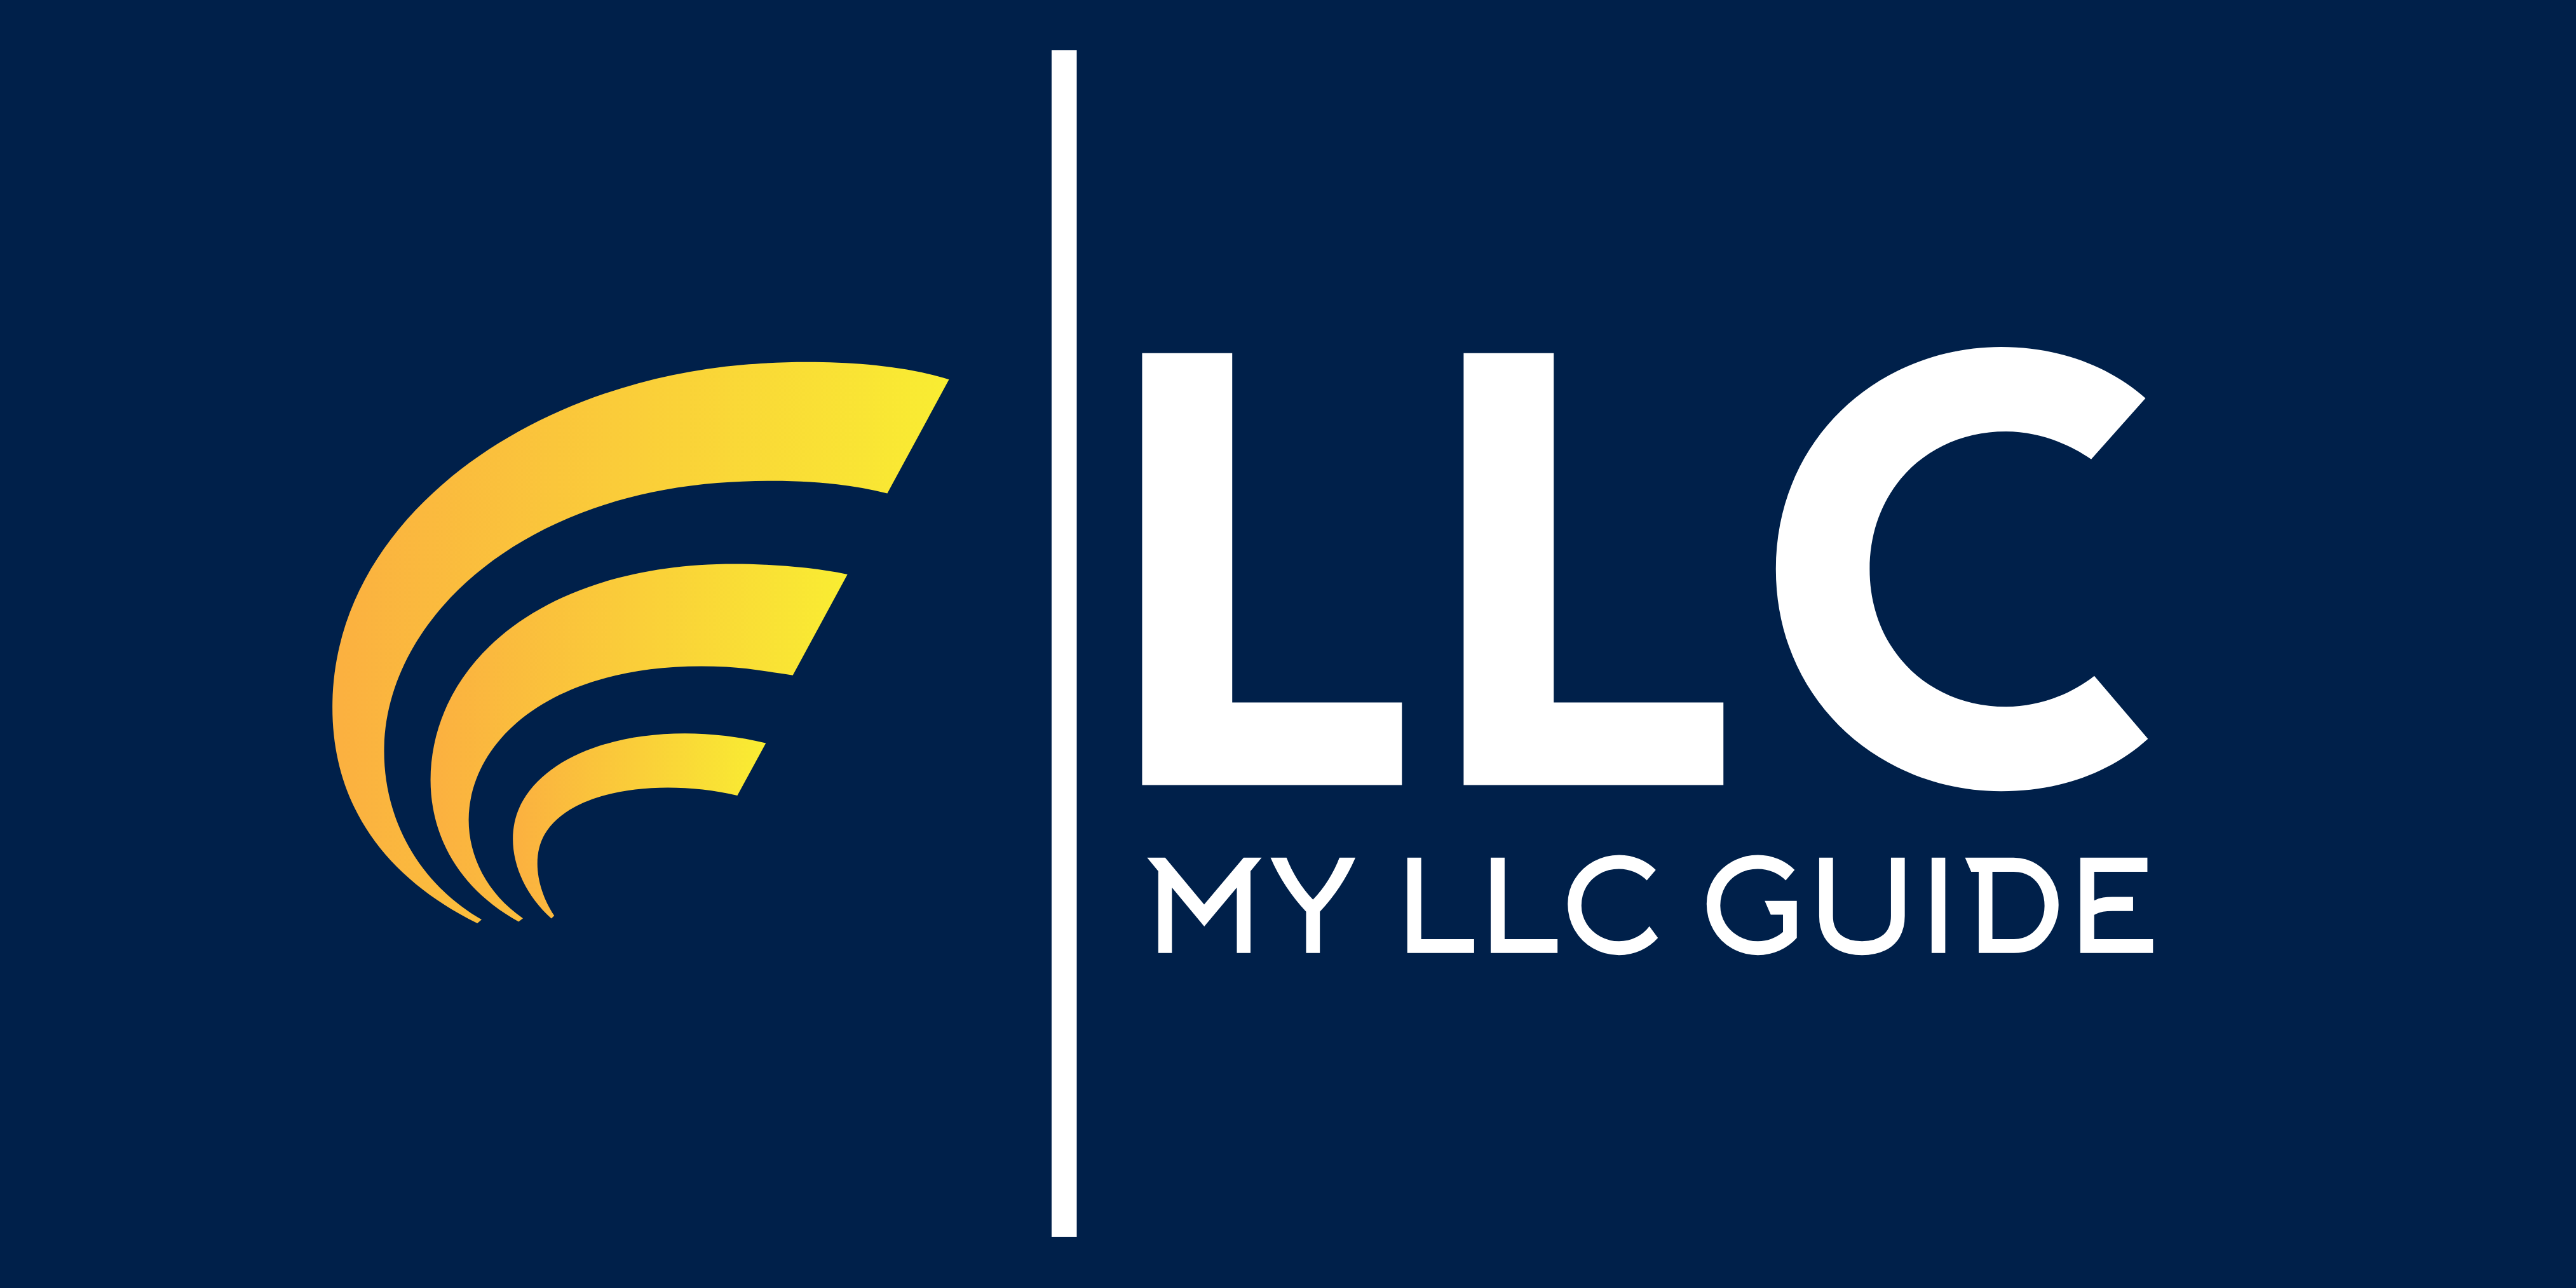 My LLC Guide company logo